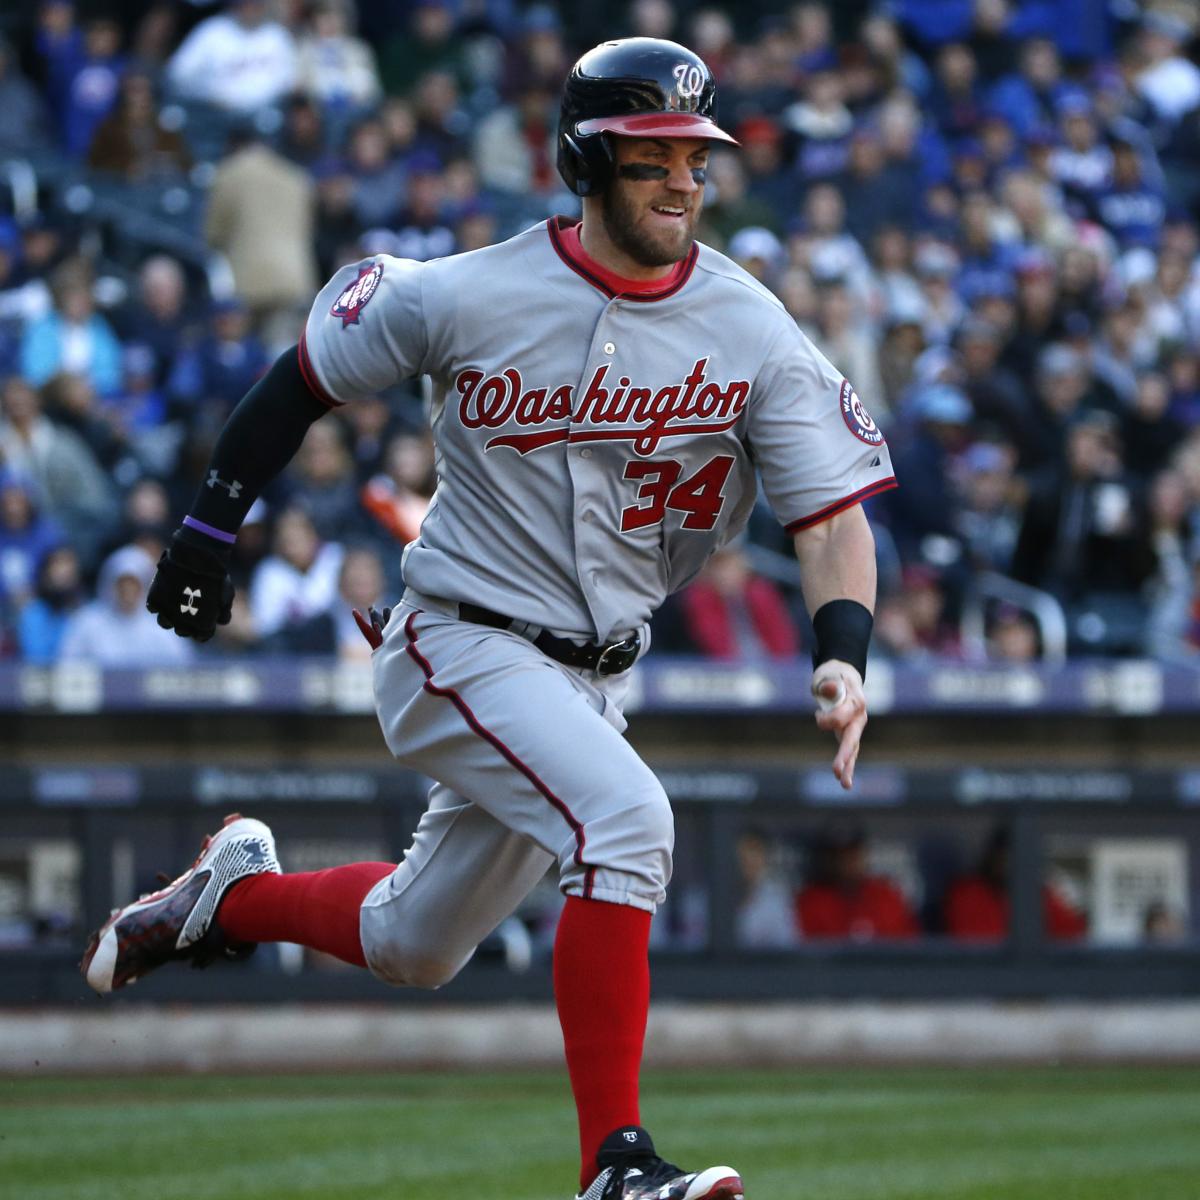 Washington Nationals' Bryce Harper: Still Baseball Cyborg, No More